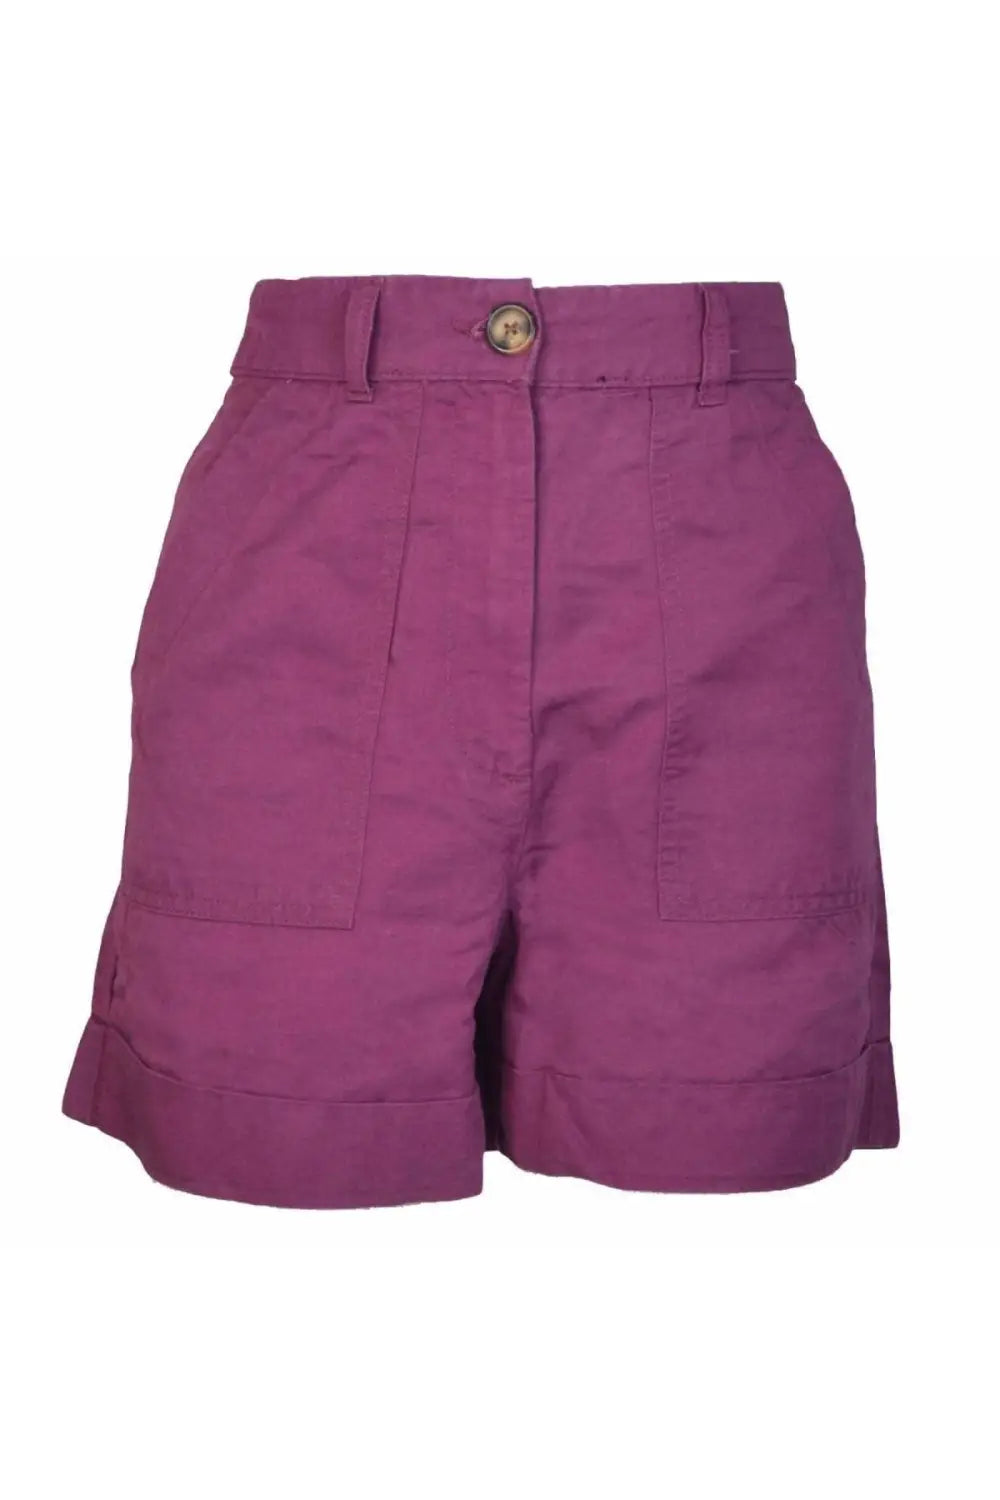 M&S Linen Blend Turn-up Shorts